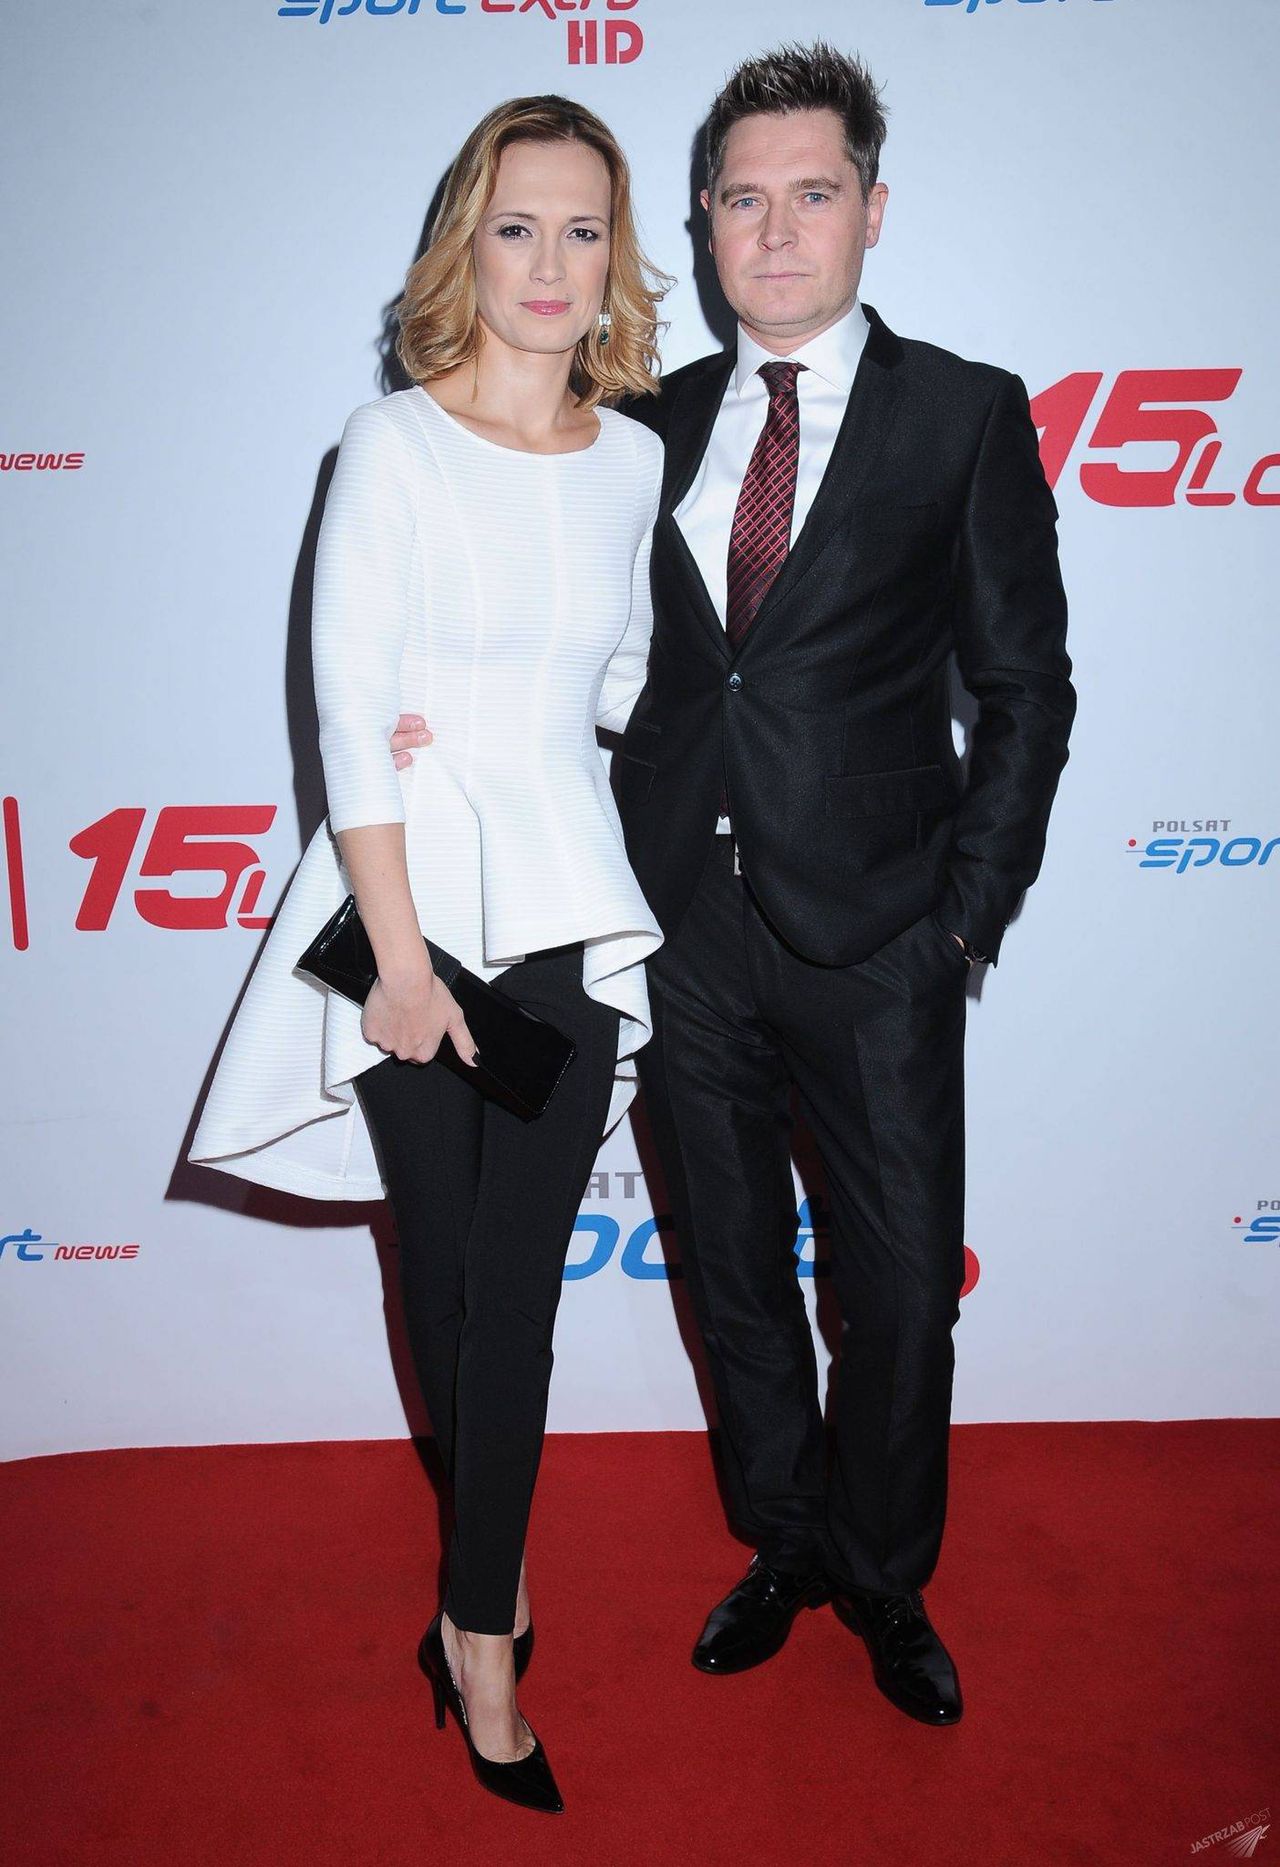 Paulina Chylewska i Marcin Feddek na konferencji ramówkowej PolsatSport HD
(Fot. ONS)